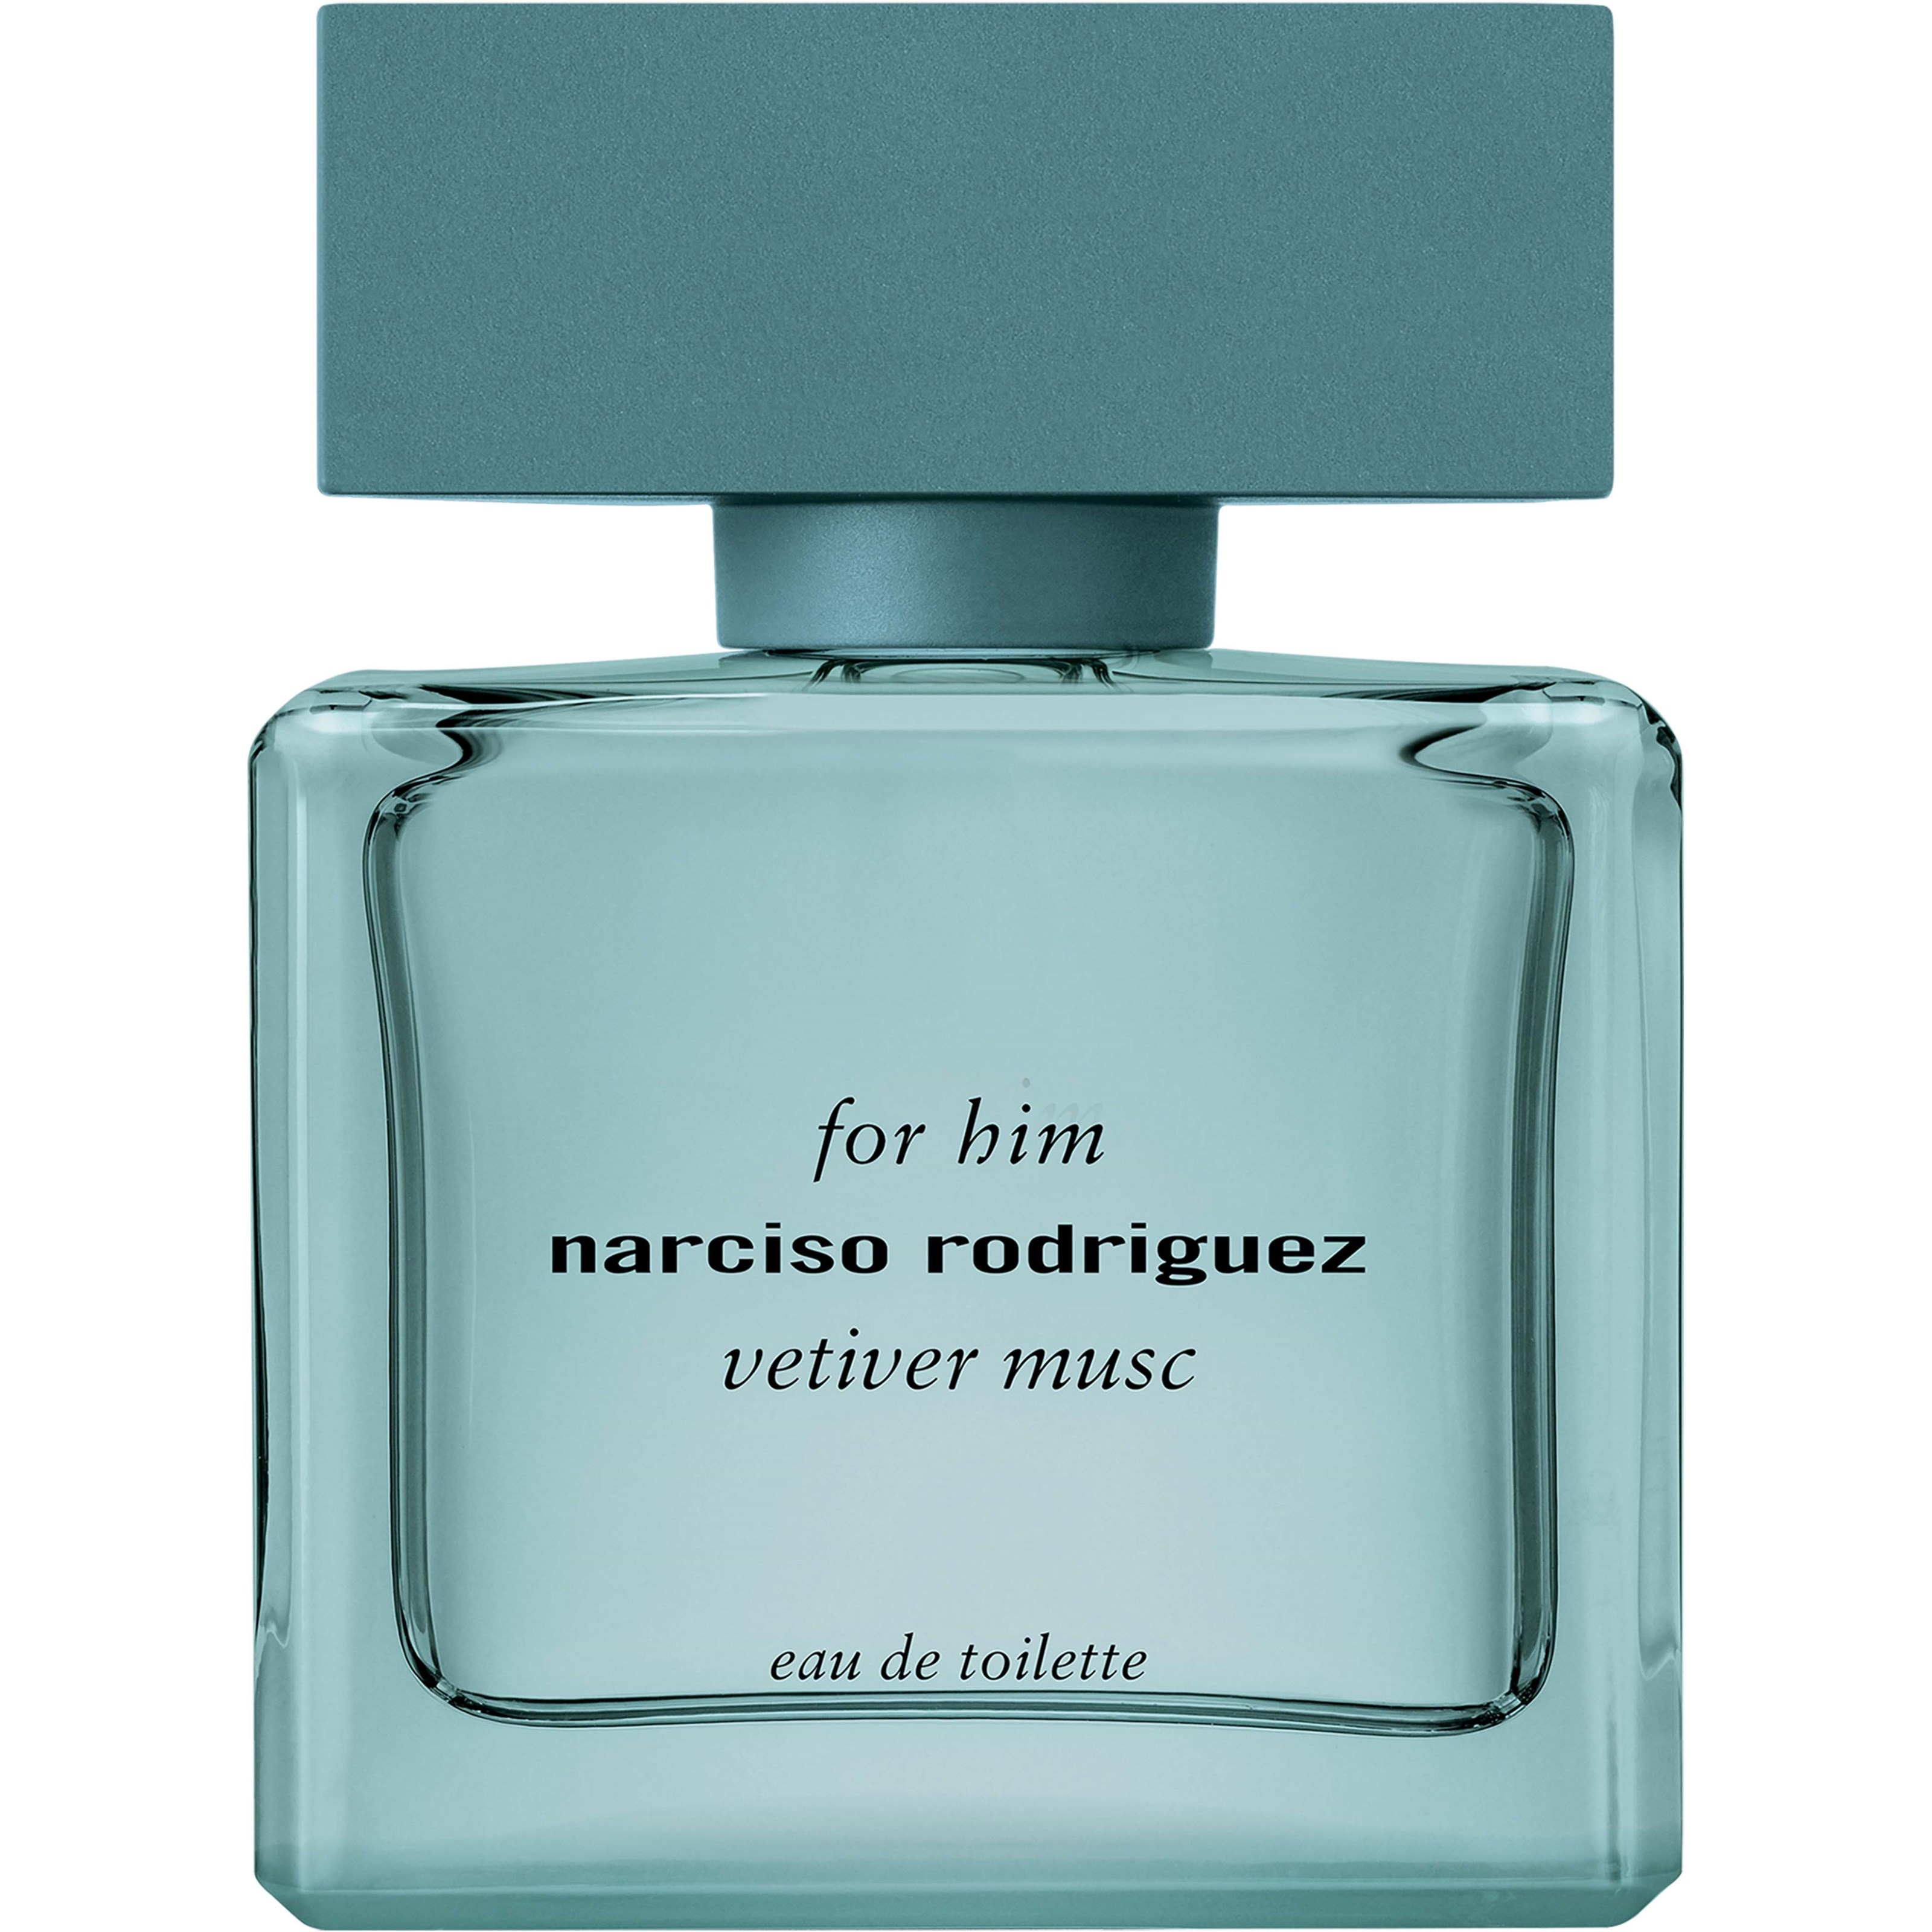 Zdjęcia - Perfuma męska Narciso Rodriguez Vetiver Musc For Him Eau de Toilette 50 ml 